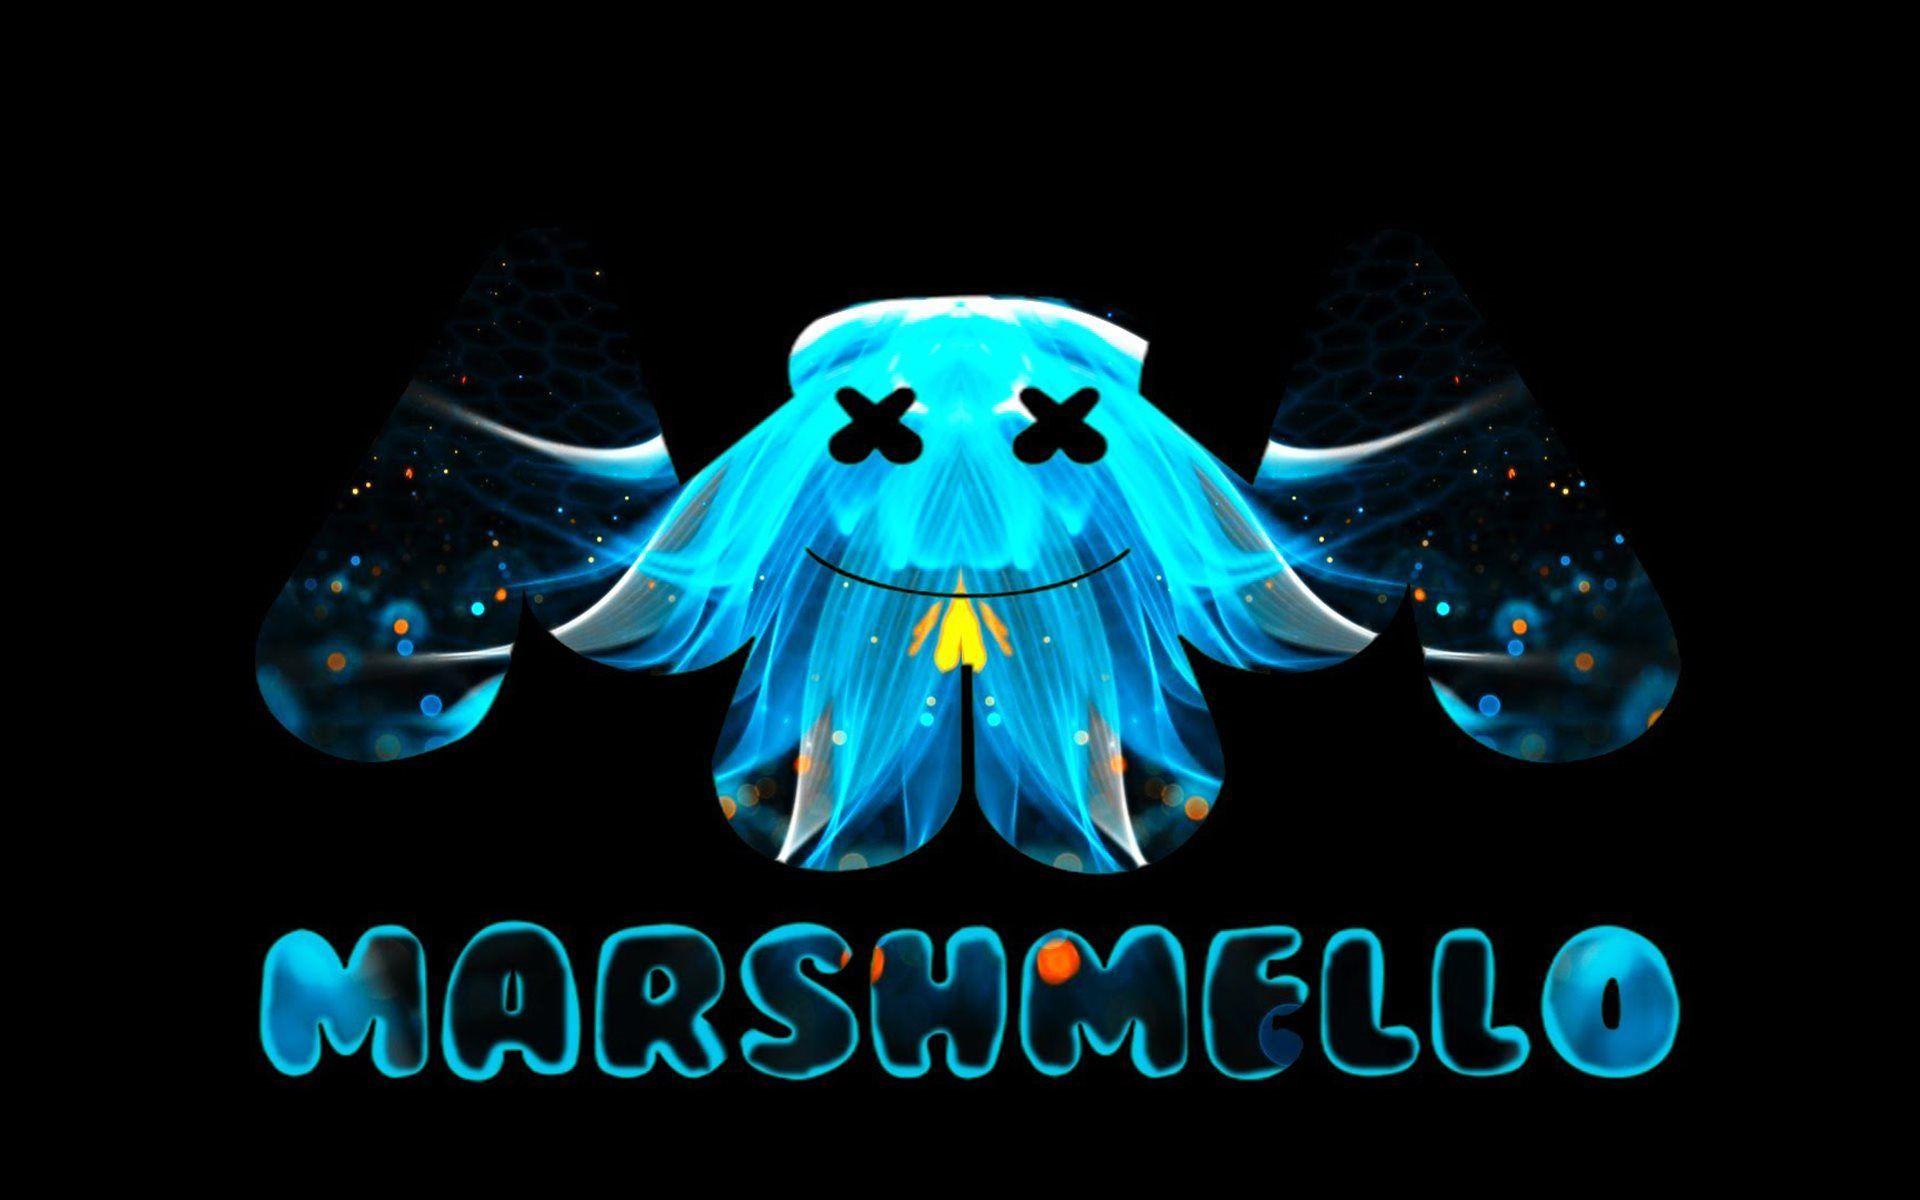 Download wallpaper Marshmello, creative logo, DJ, art for desktop